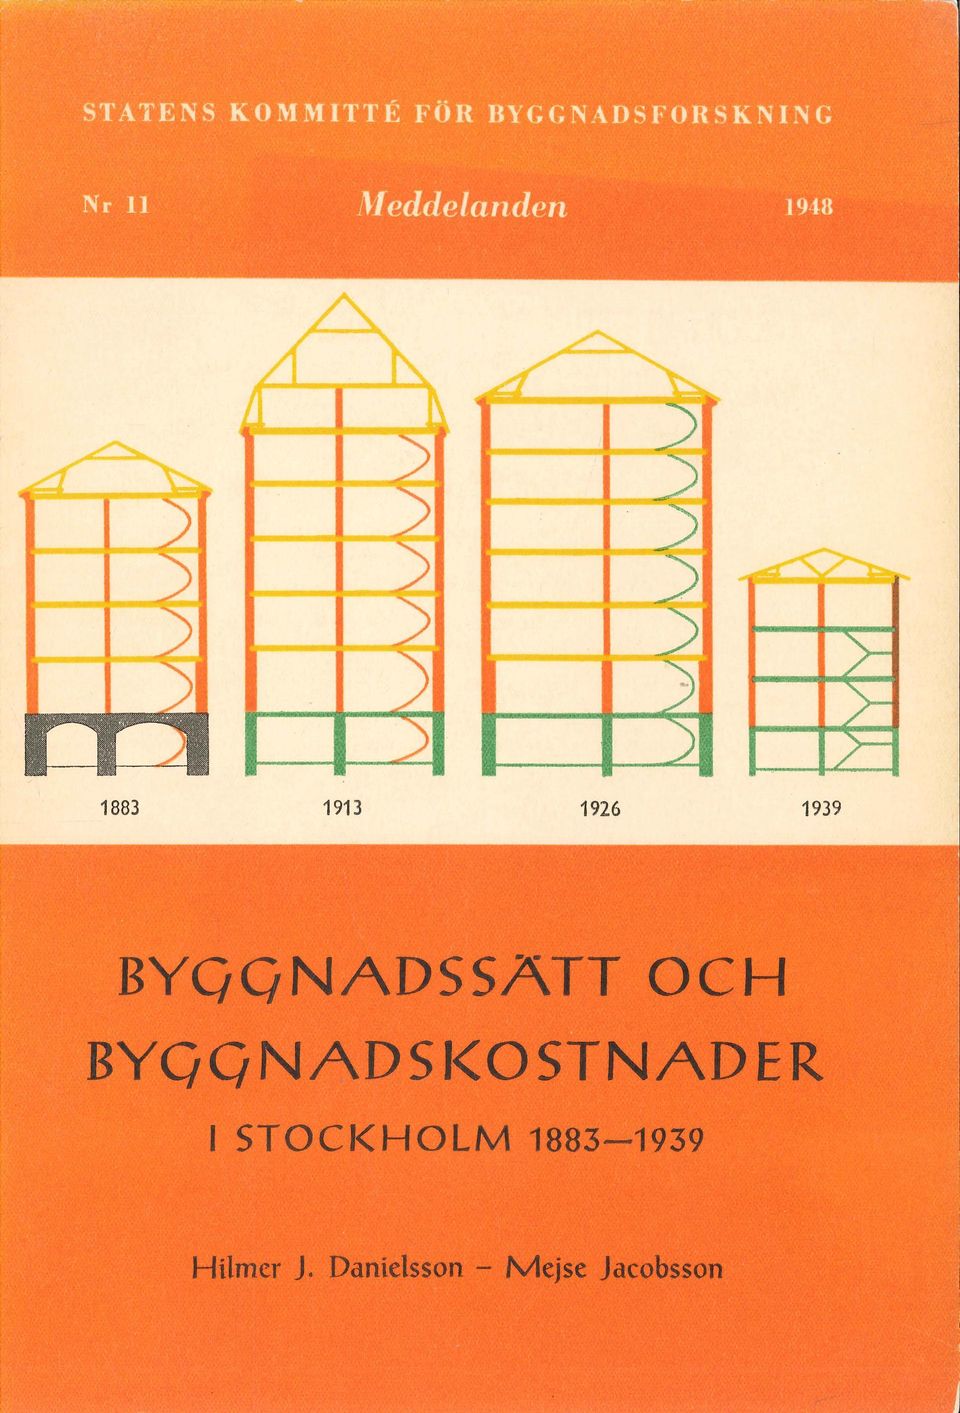 BYQQNADSI<OSTNADER STOCKHOLM